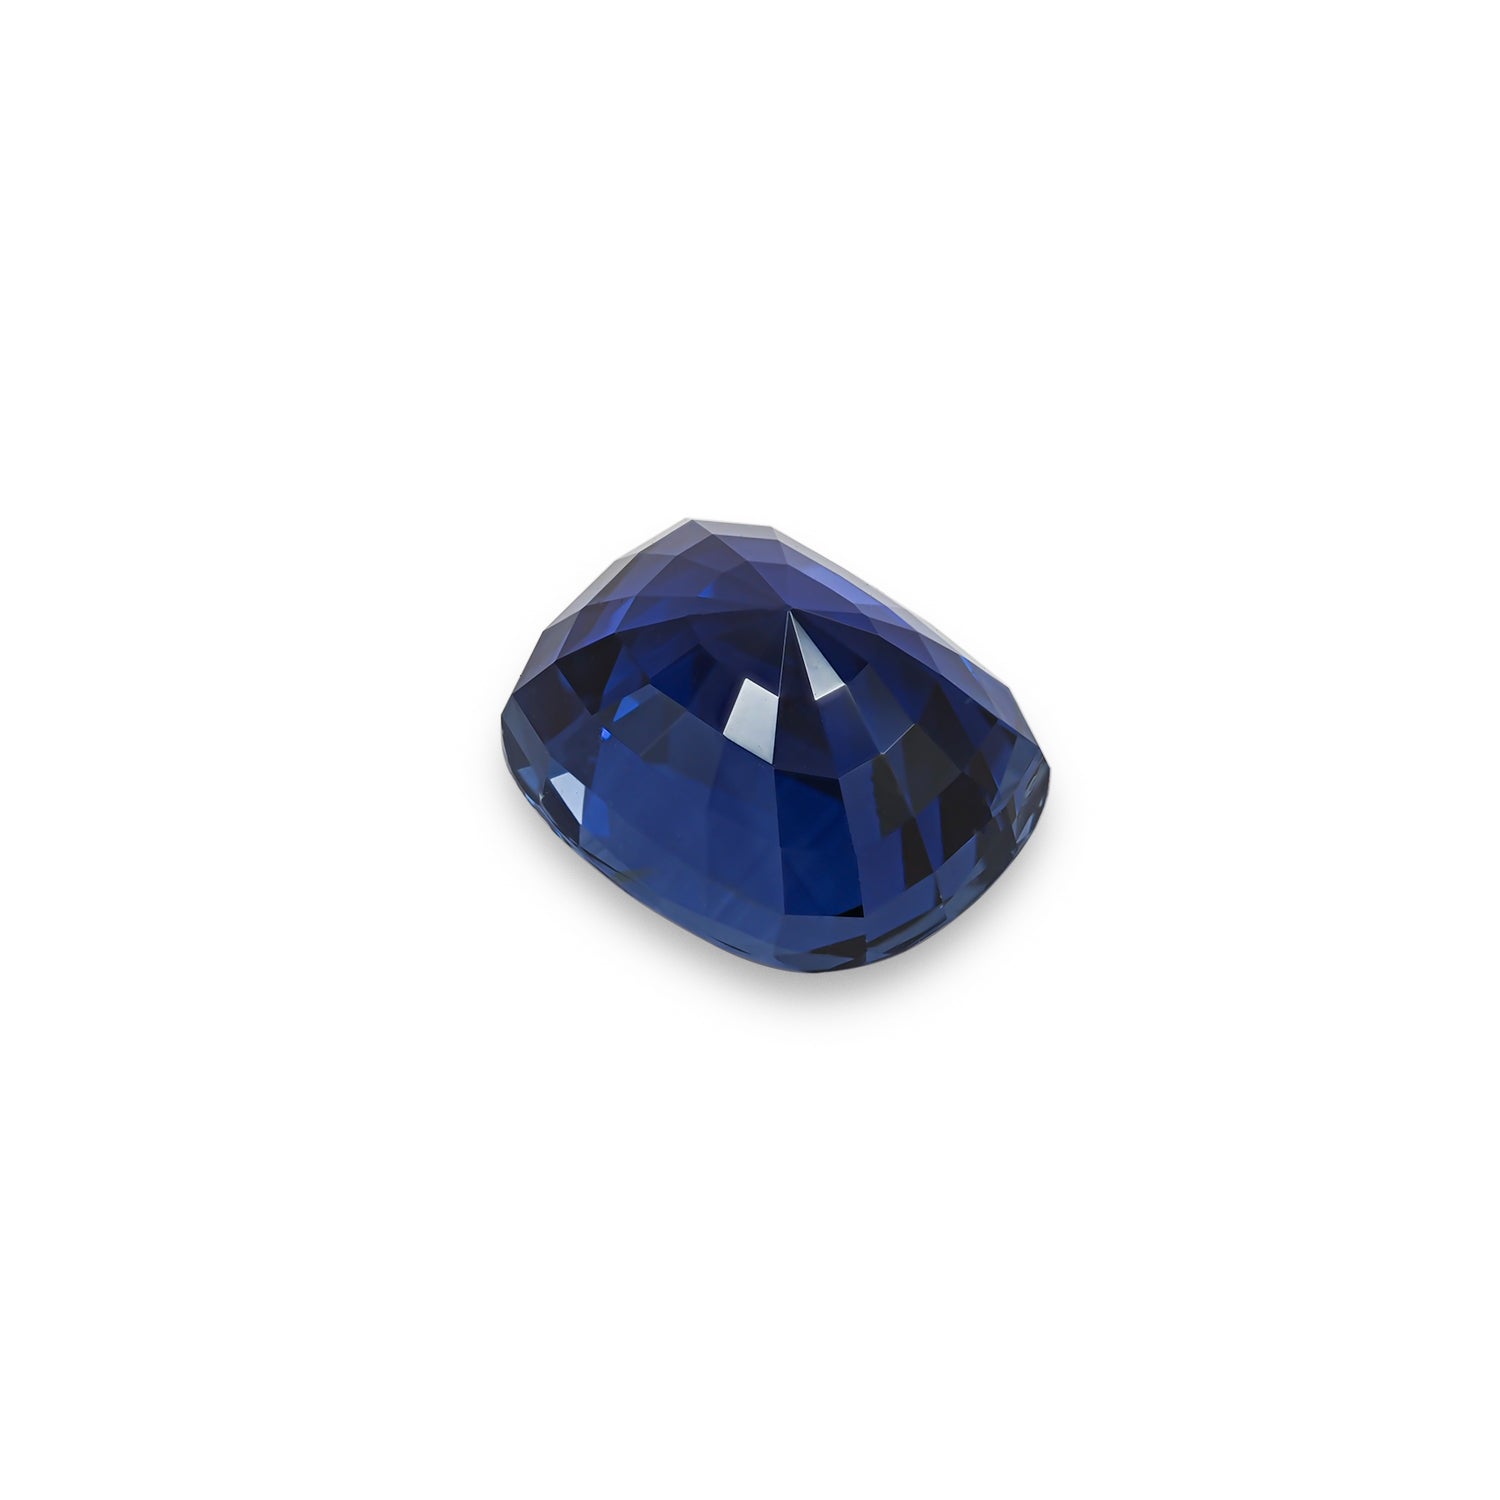 Unheated Blue sapphire 5.17 CT